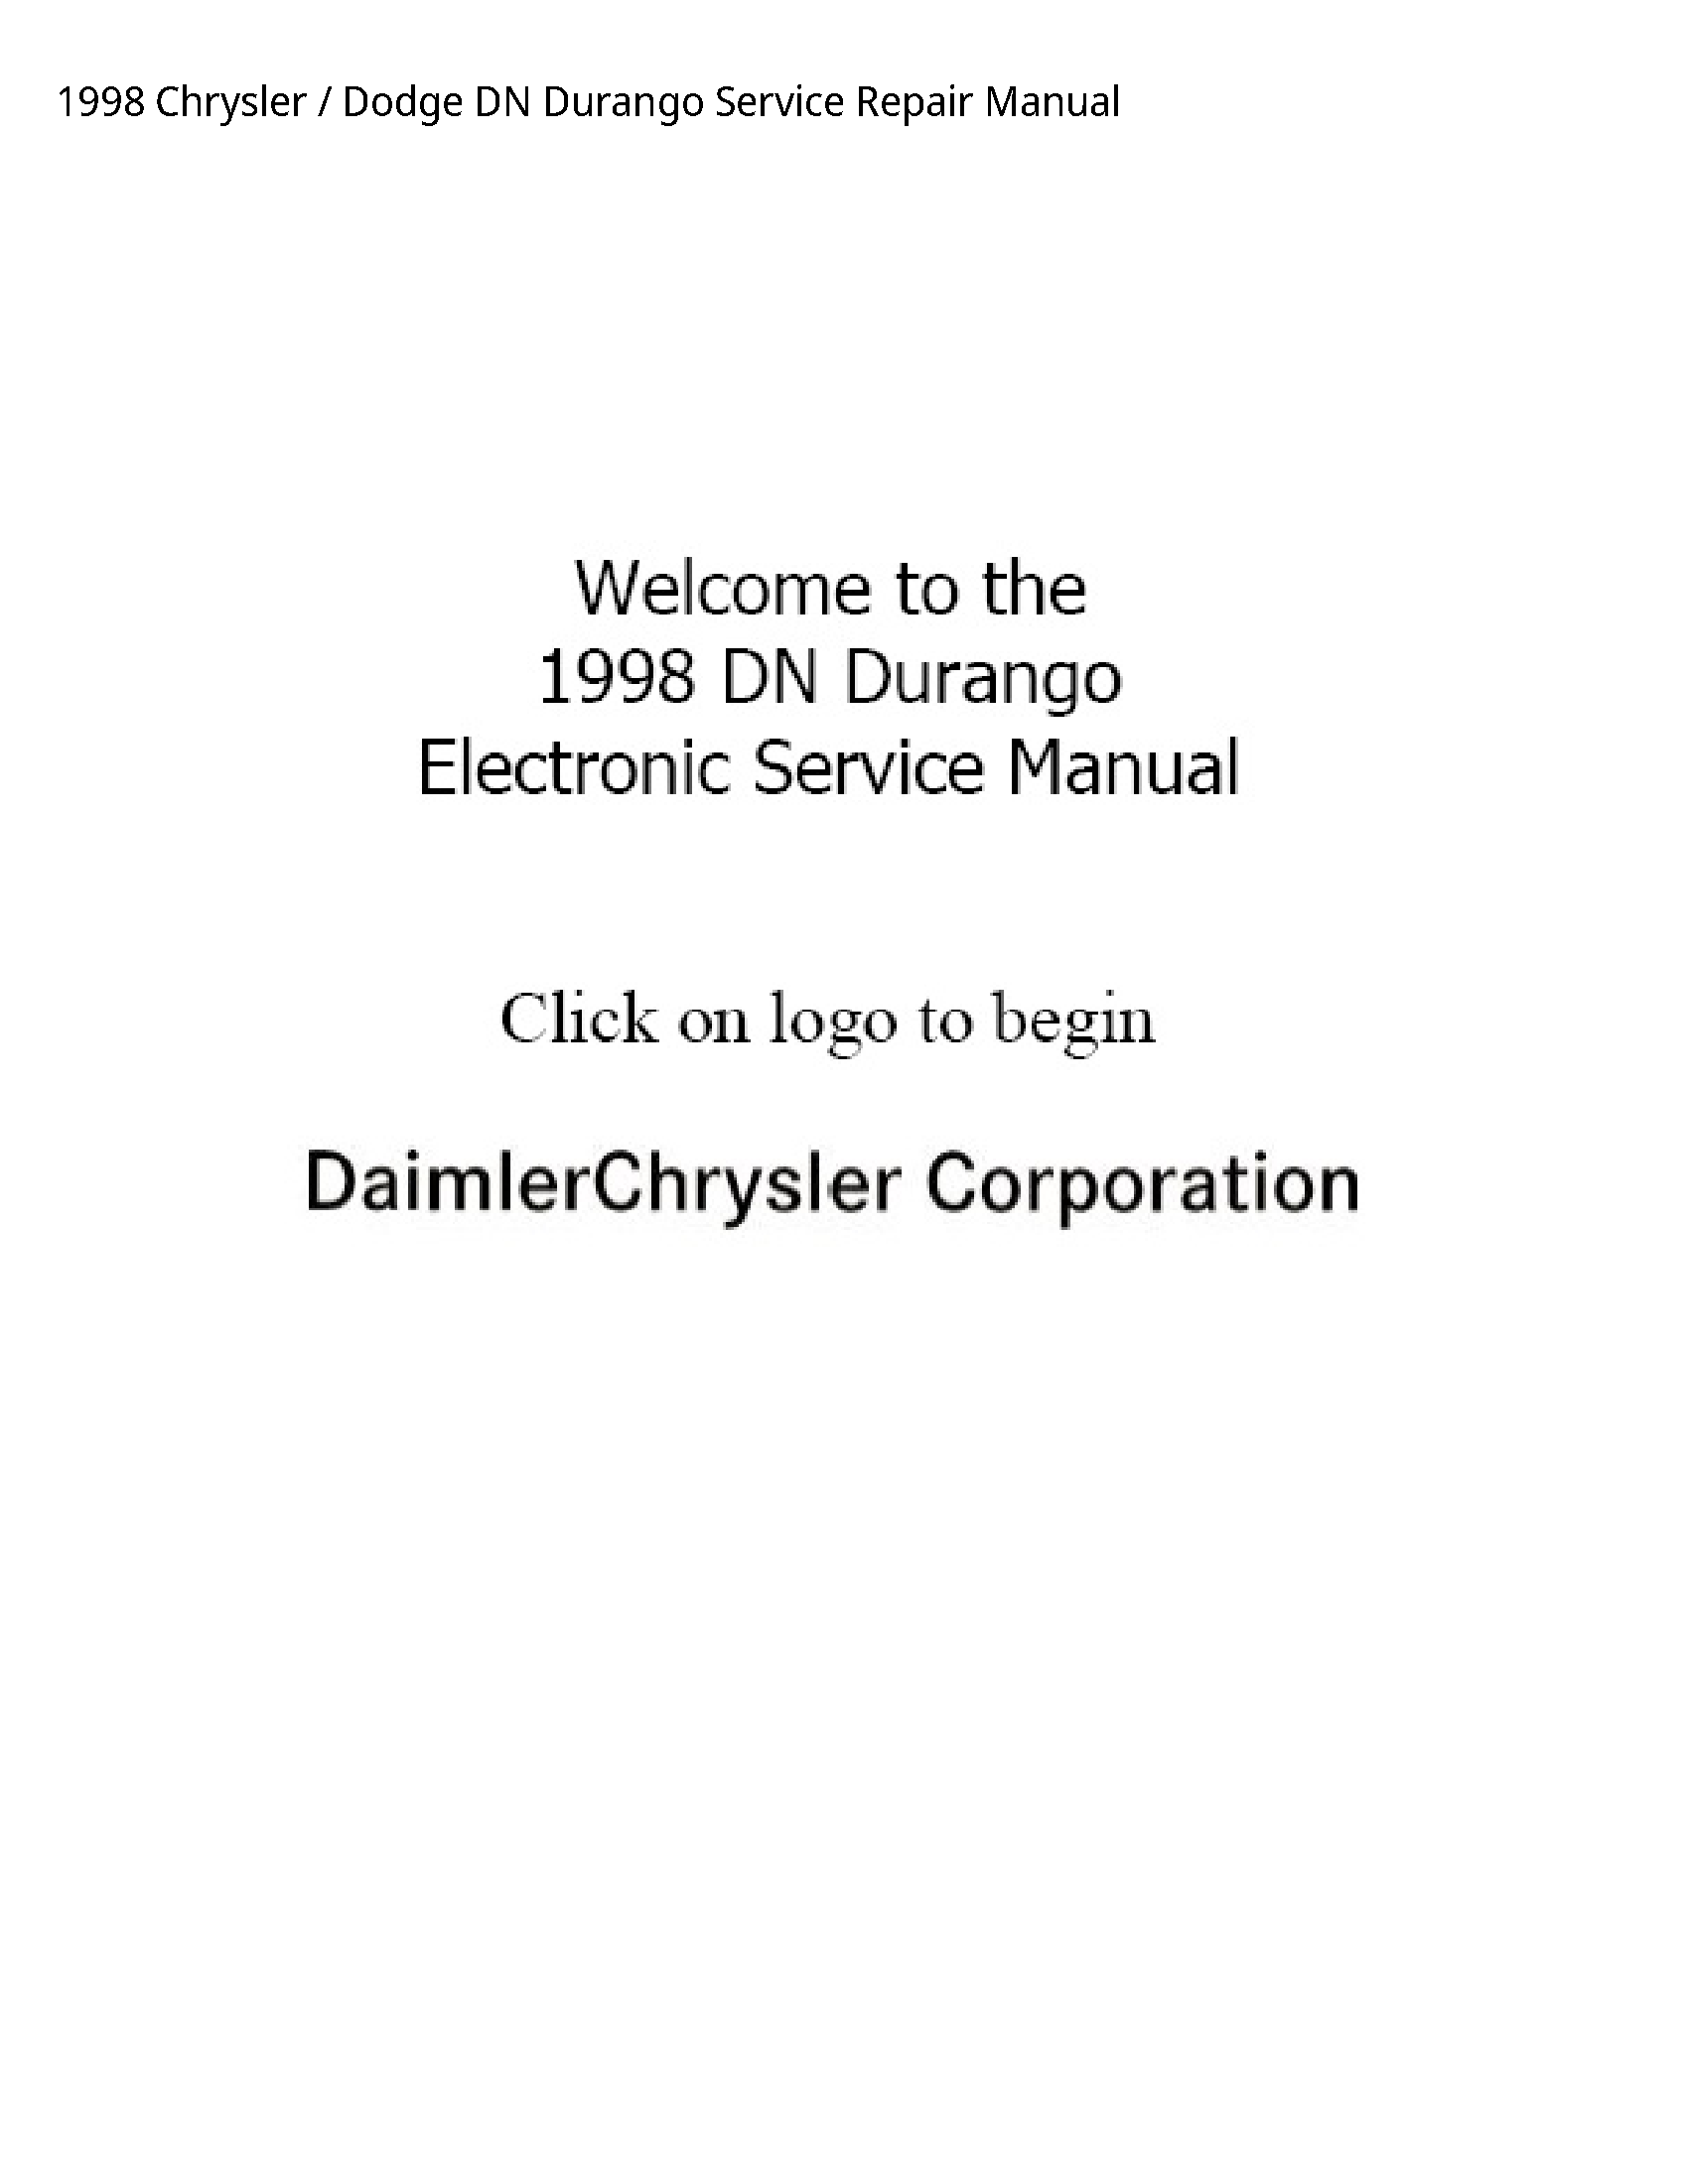 Chrysler Dodge DN Durango manual